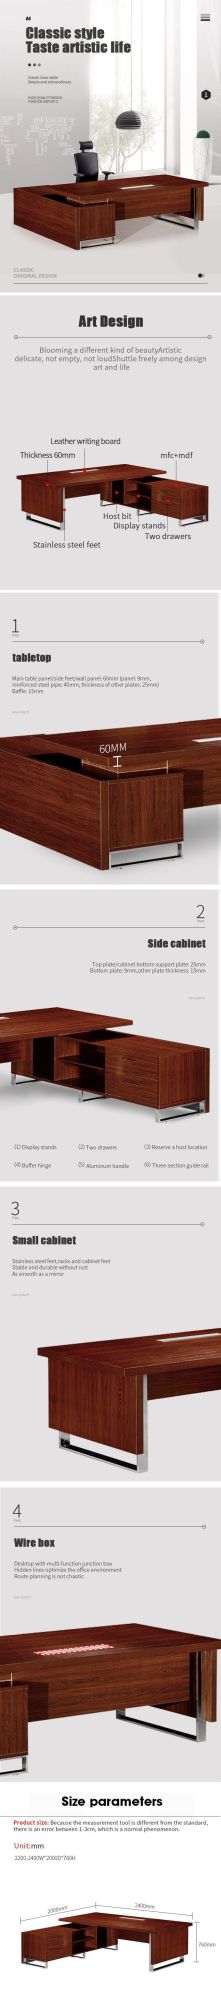 L Shape Modern Wooden Executive Manager Office Desk on Sale